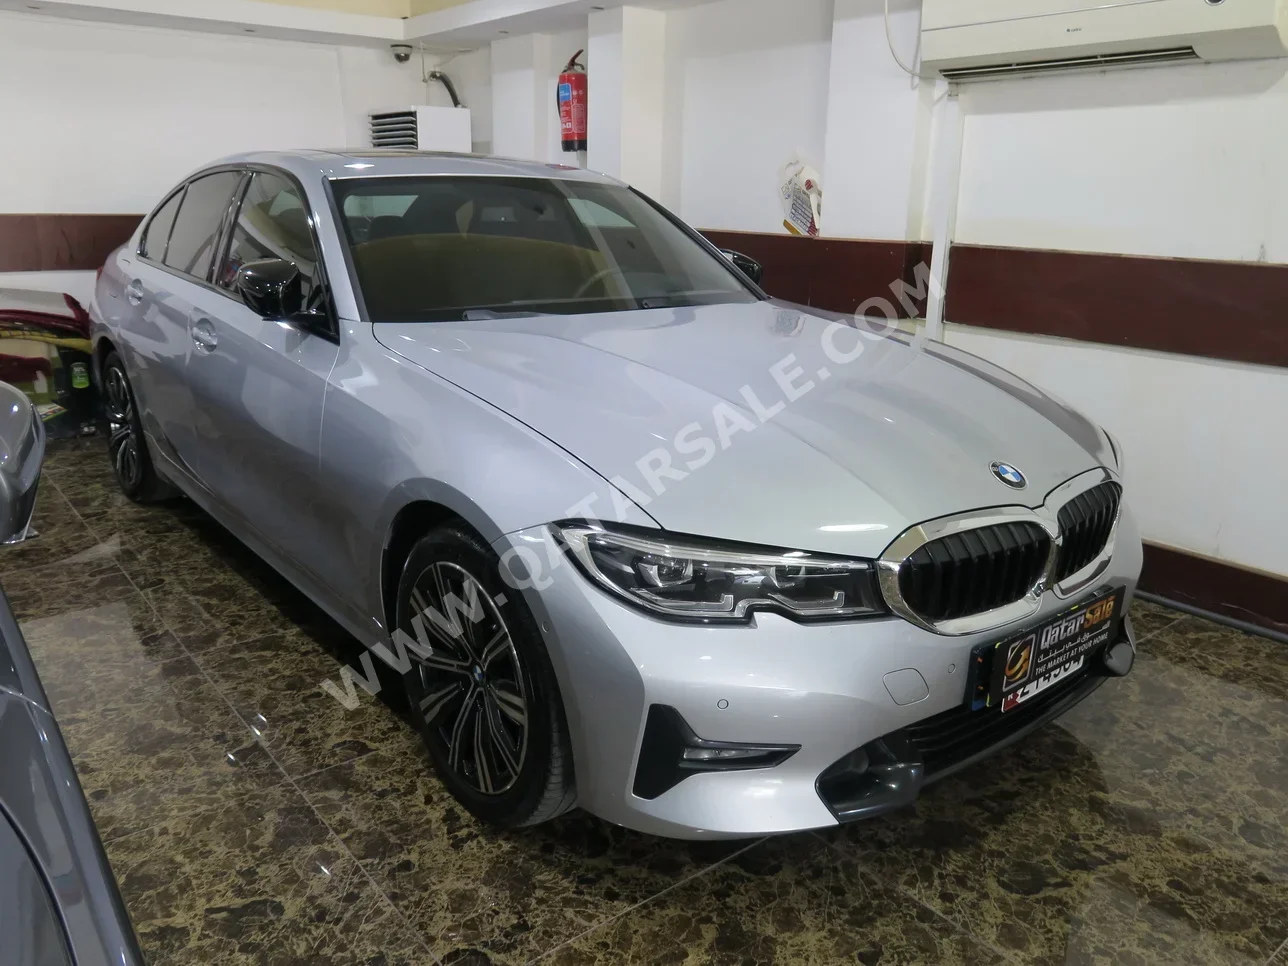 BMW  3-Series  330i  2019  Automatic  56,000 Km  4 Cylinder  Rear Wheel Drive (RWD)  Sedan  Gray  With Warranty